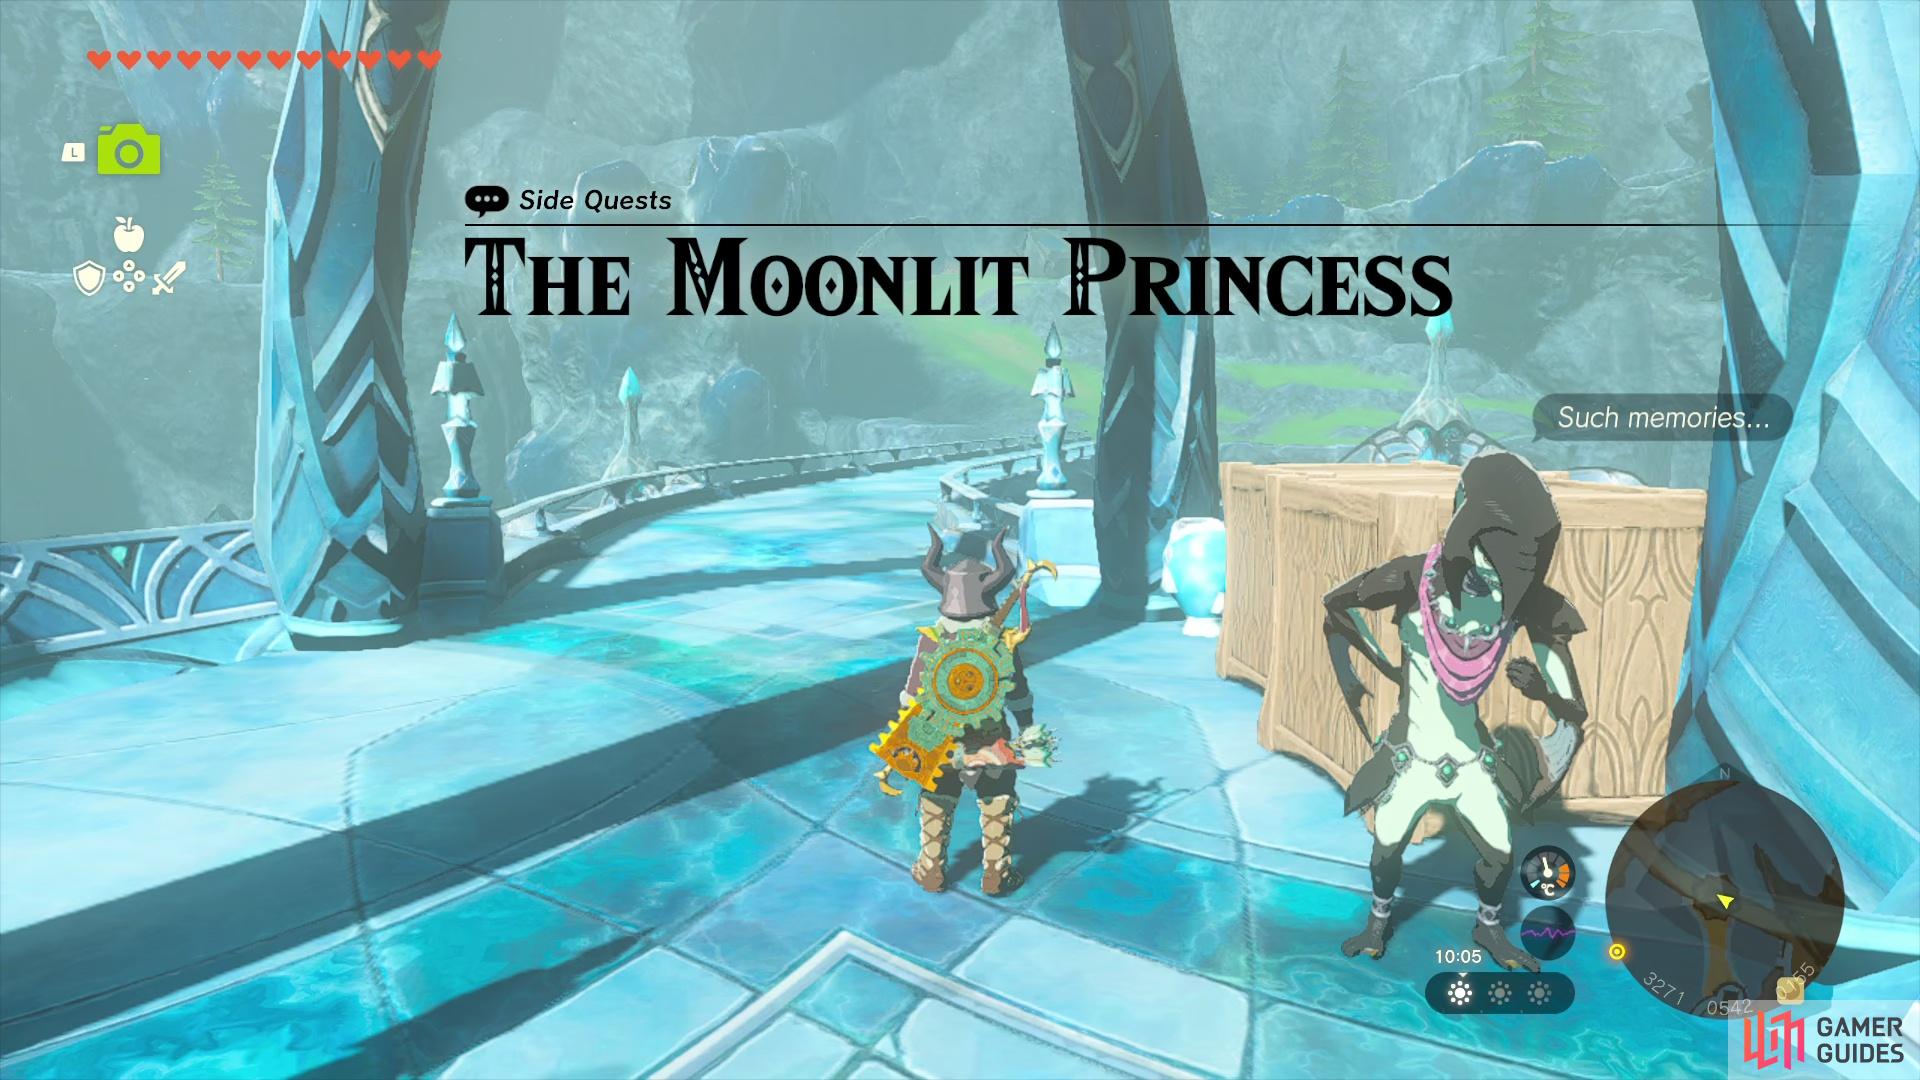 You can begin the Moonlit Princess in Zora’s Domain.